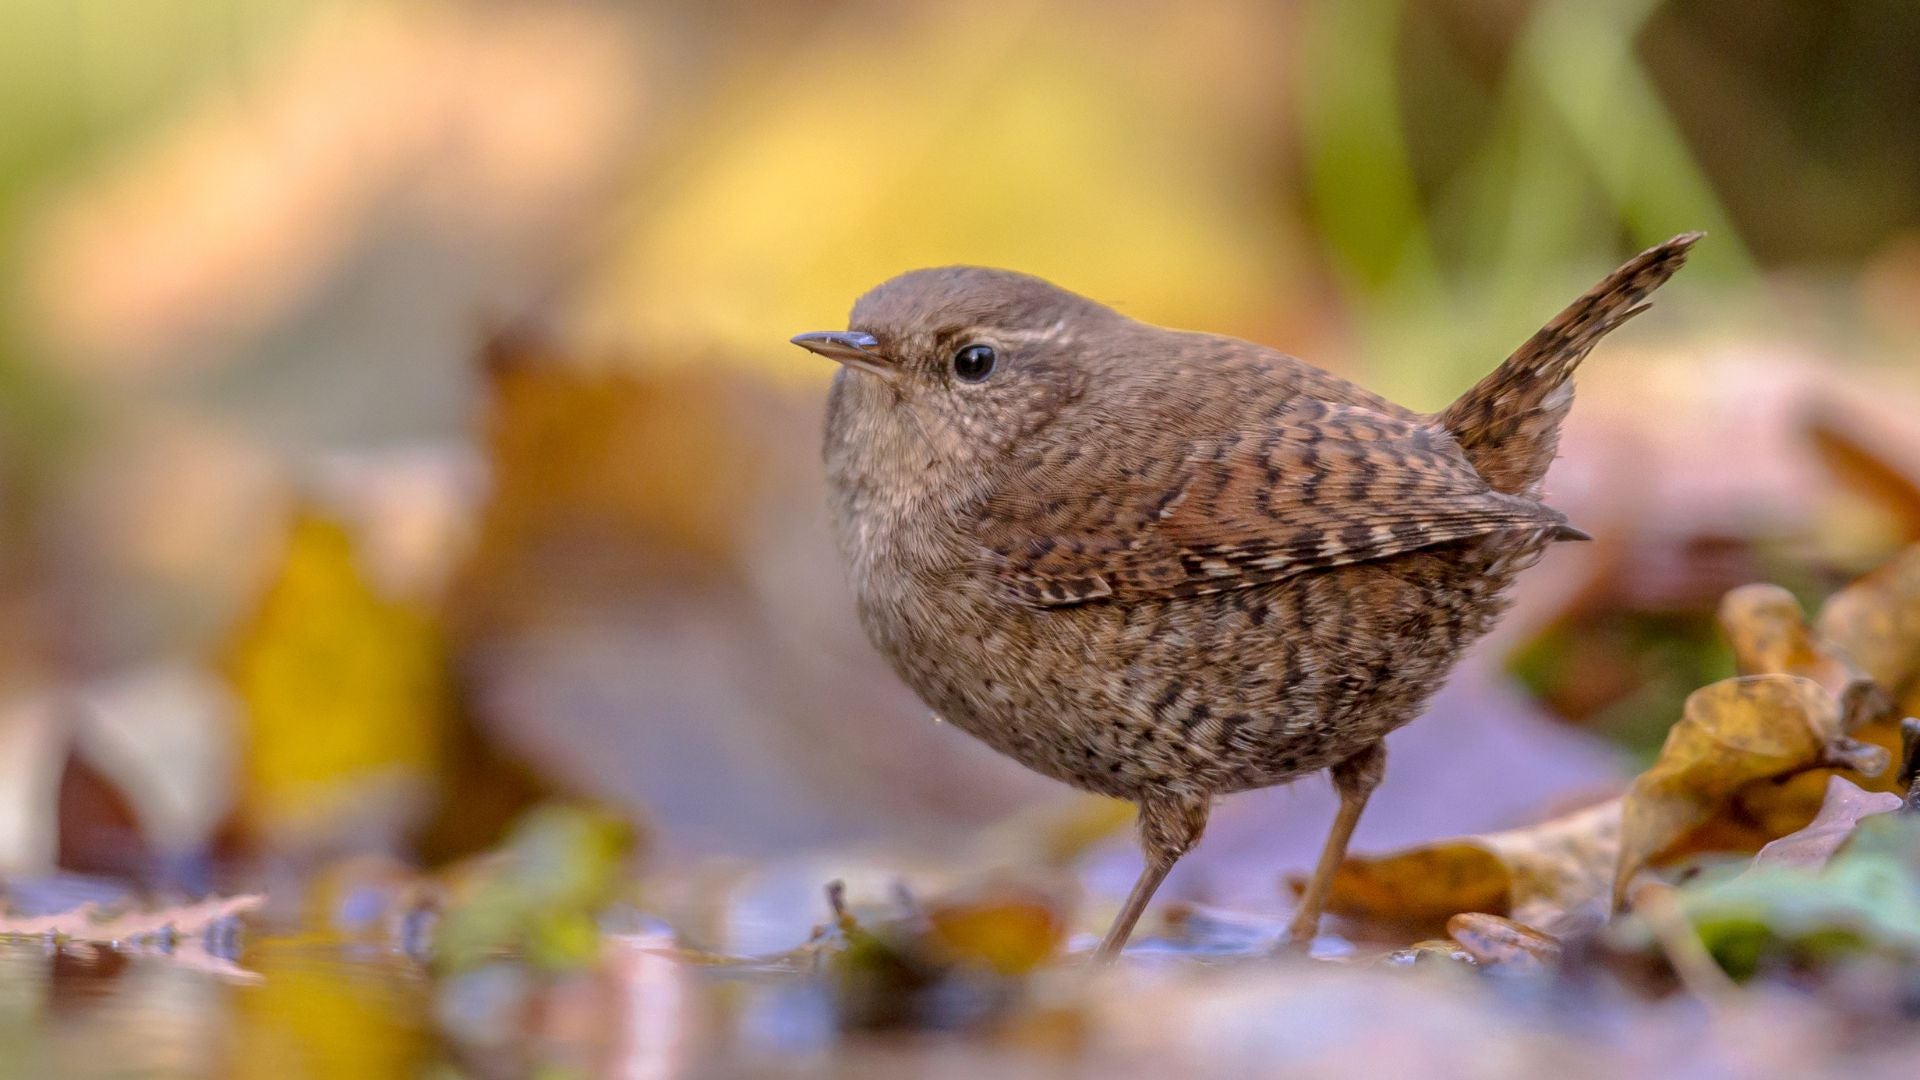 Autumn Garden Care: Preparing a Haven for Birds and Wildlife